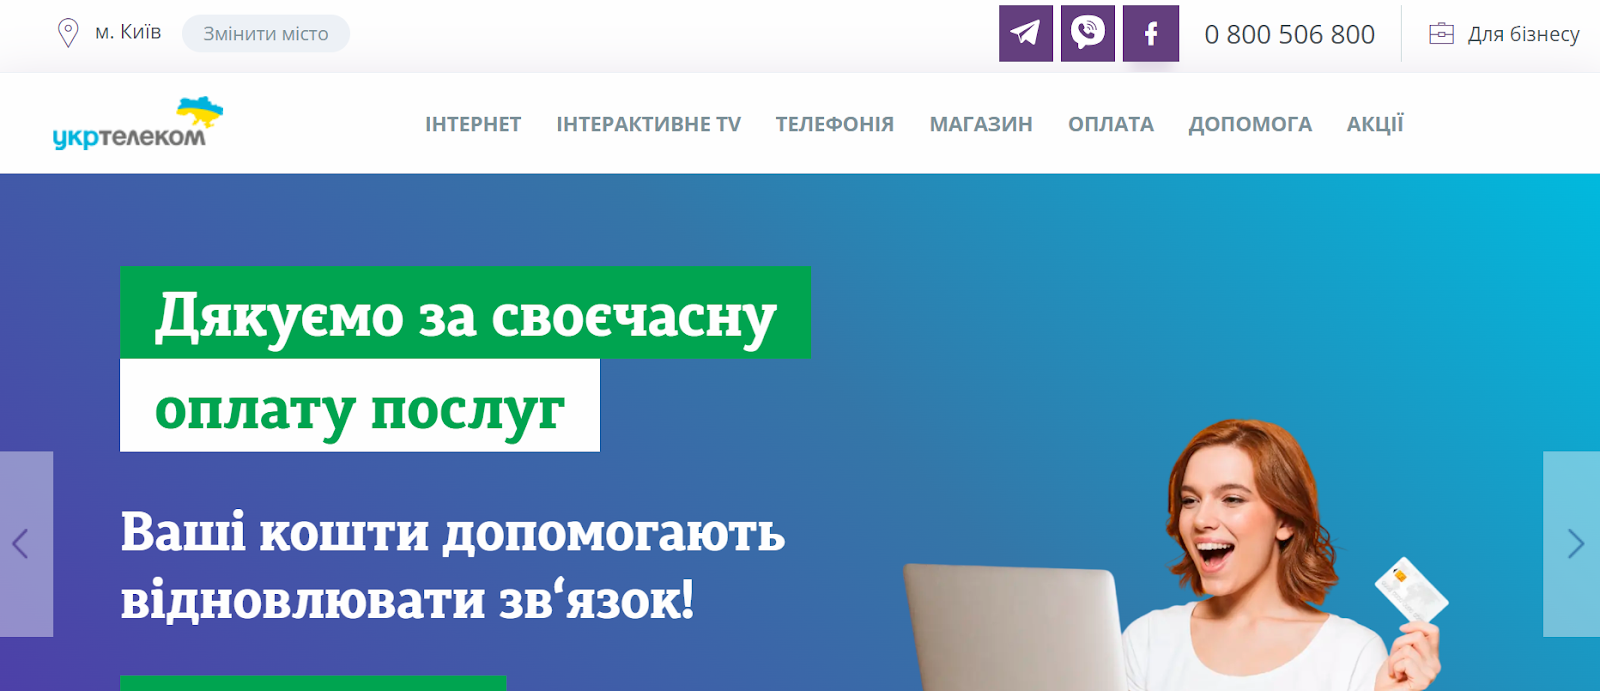 Ukrtelecom website snapshot highlighting the services it offers.